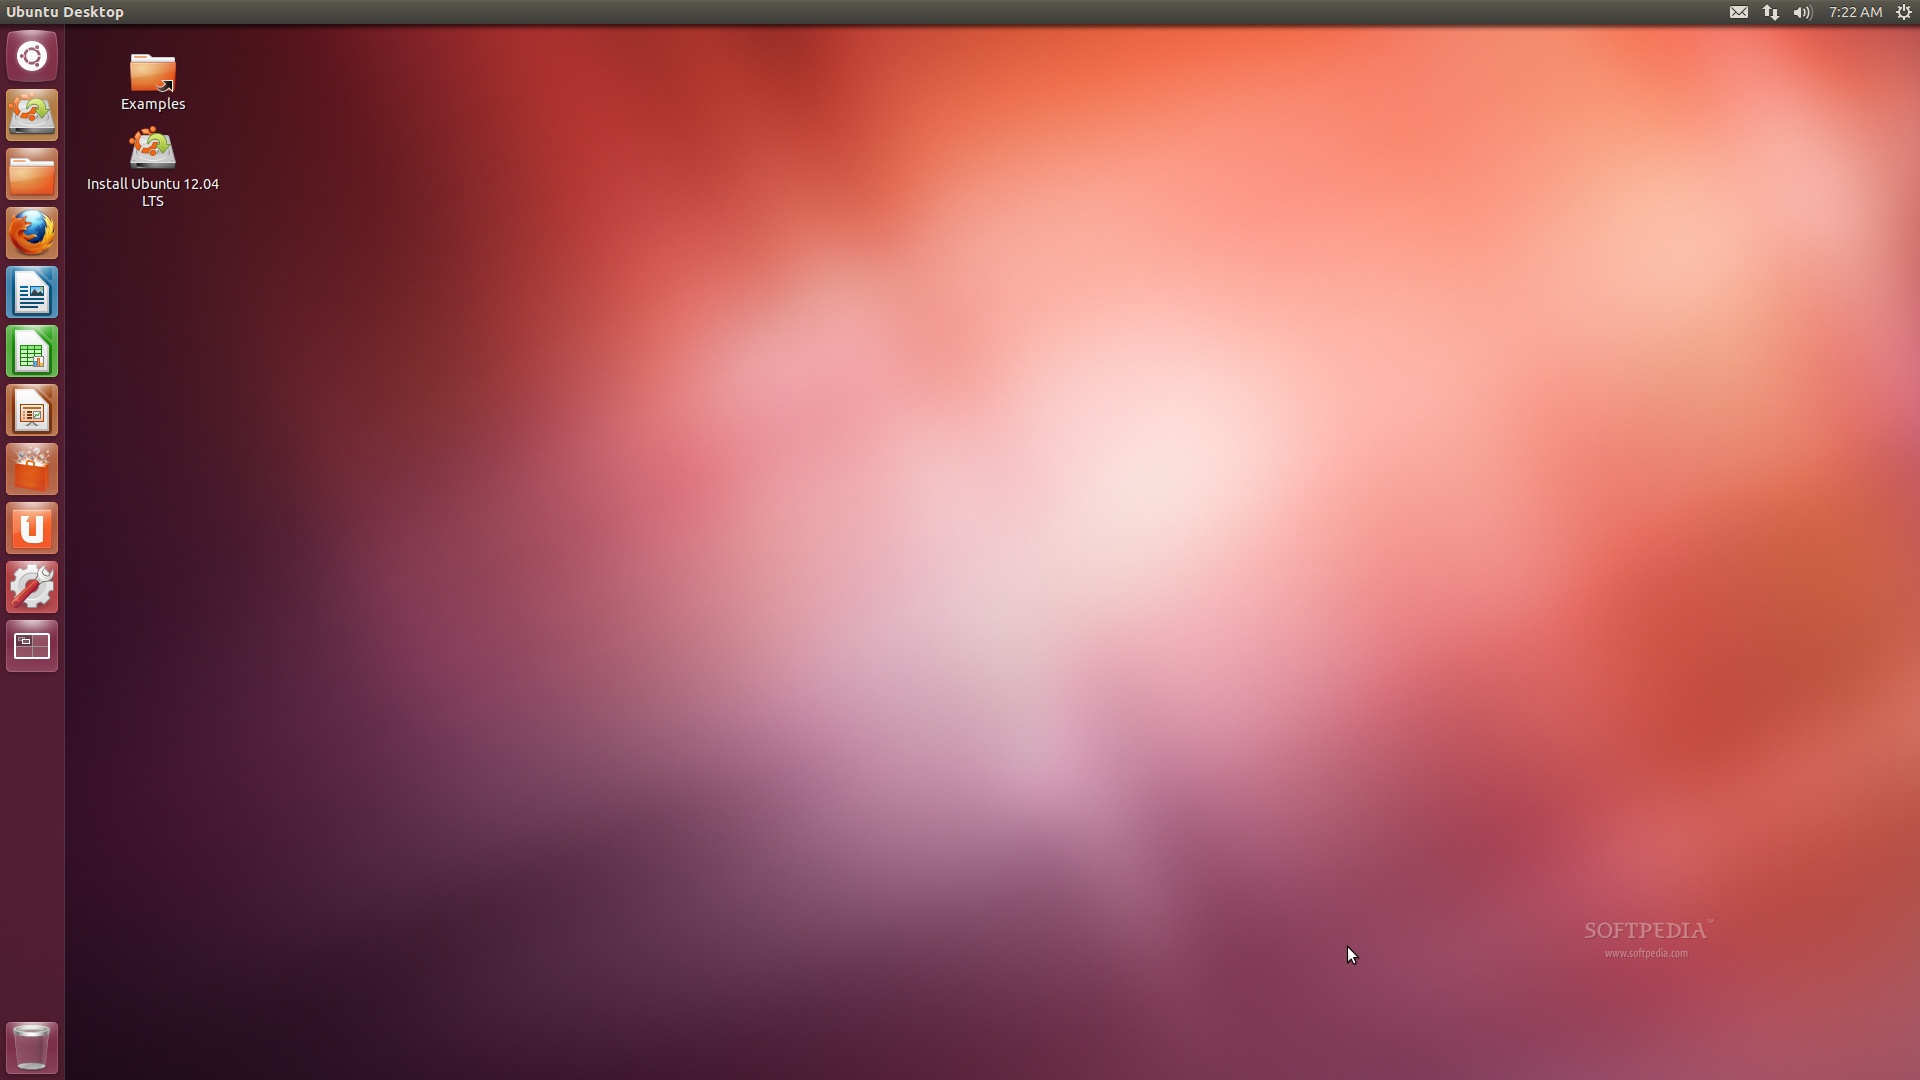 comment installer ubuntu 12.04 lts